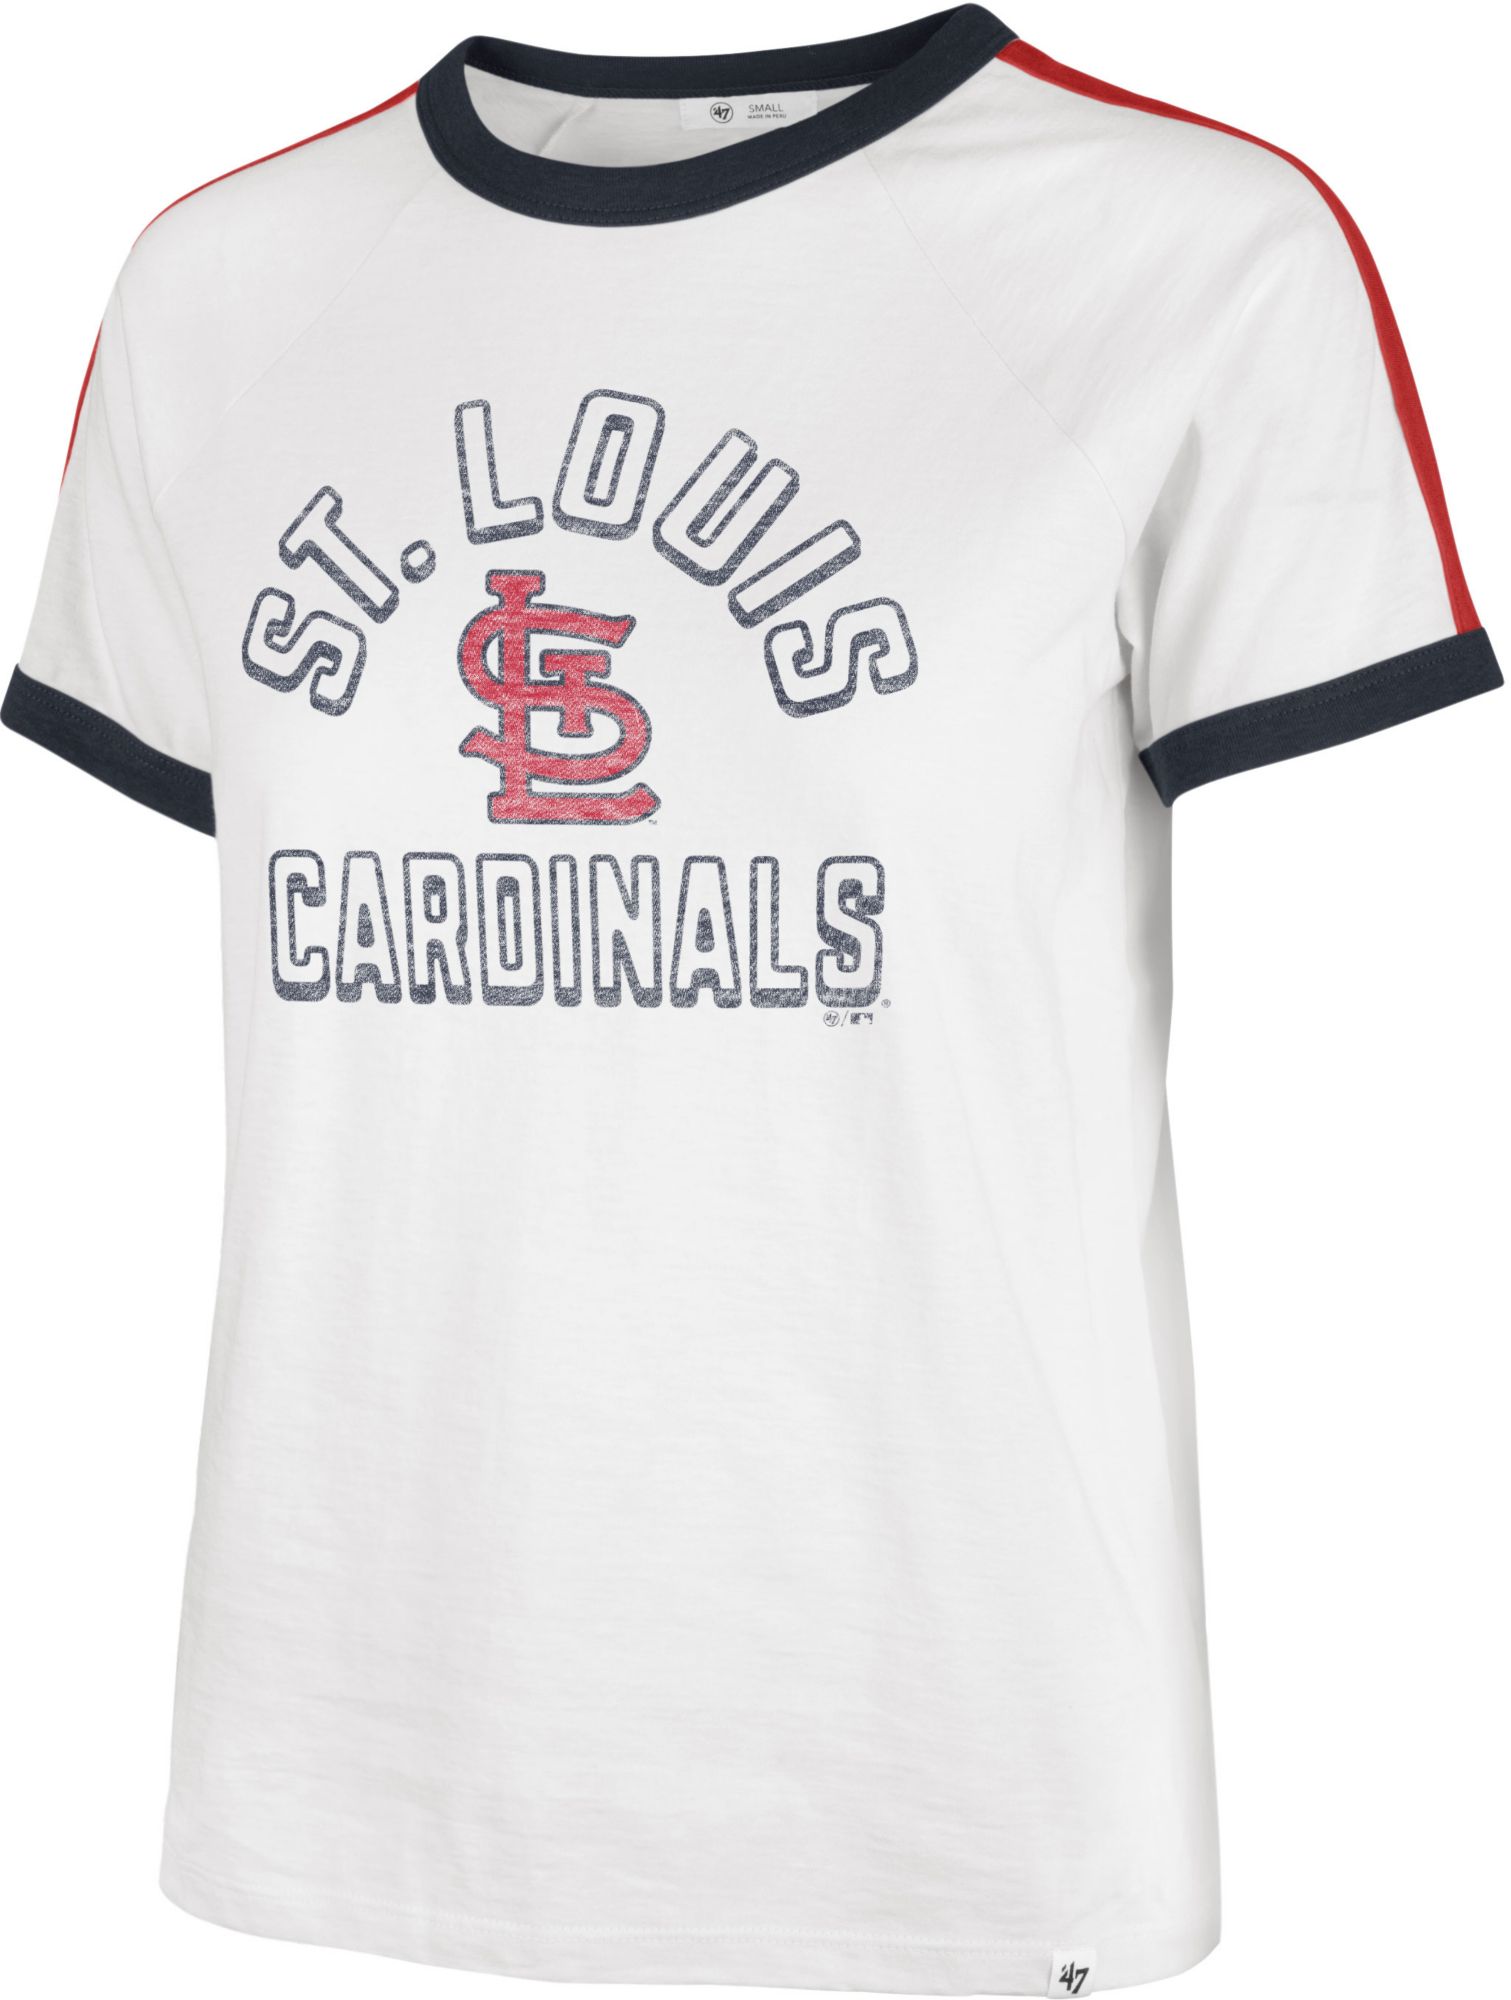 St Louis Cardinals Womens White Tailgate Raglan LS Tee  St louis cardinals  shirts, T shirt diy, Shirt design inspiration